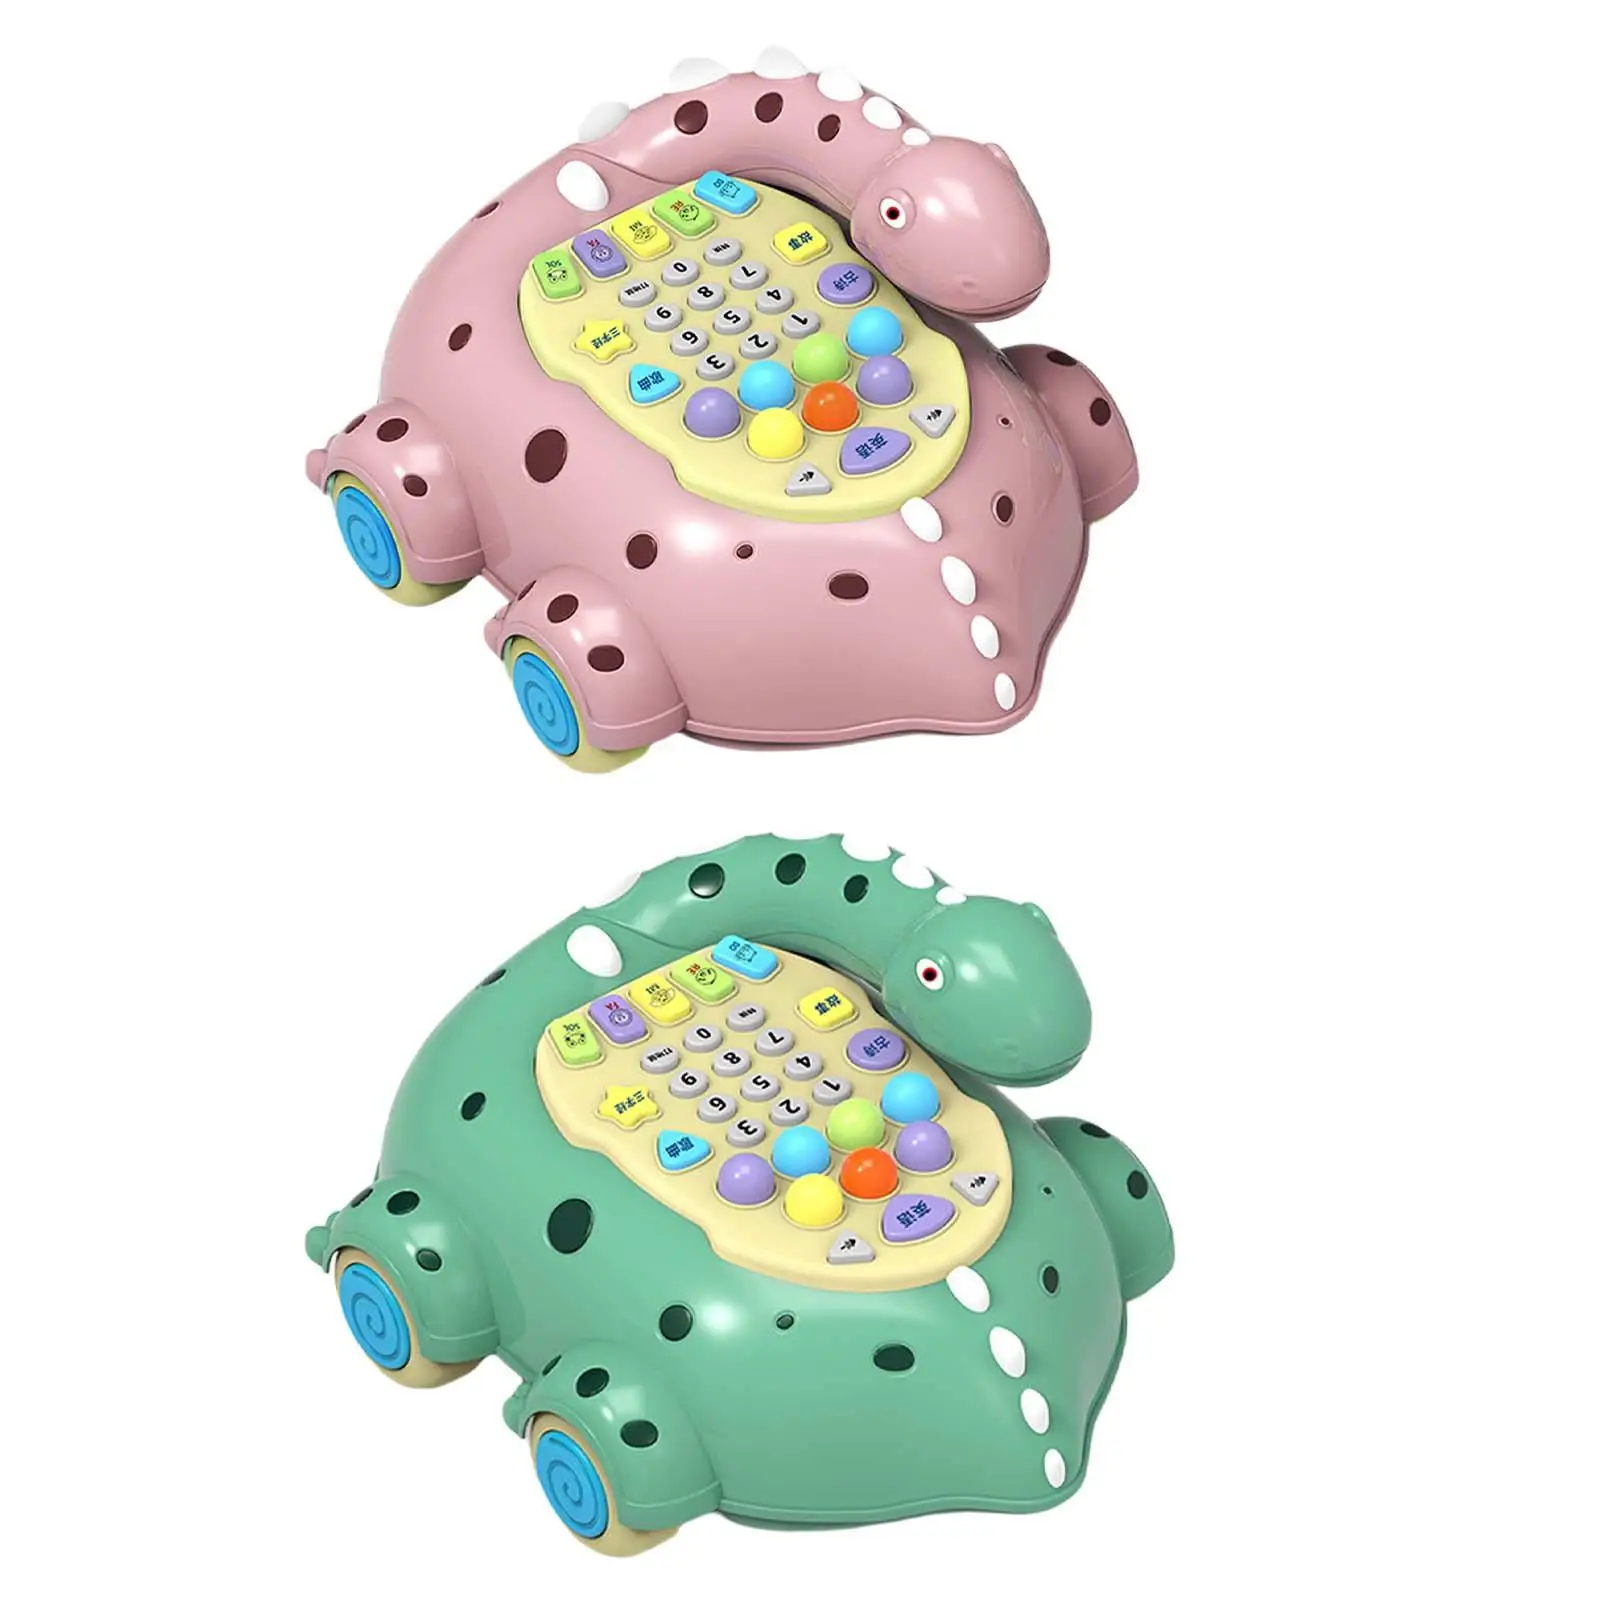 Kids Musical Telephone Toys Car Pull Toys Multifunctional Music Light Phone Toy for Game Sensory Development Learning Preschool